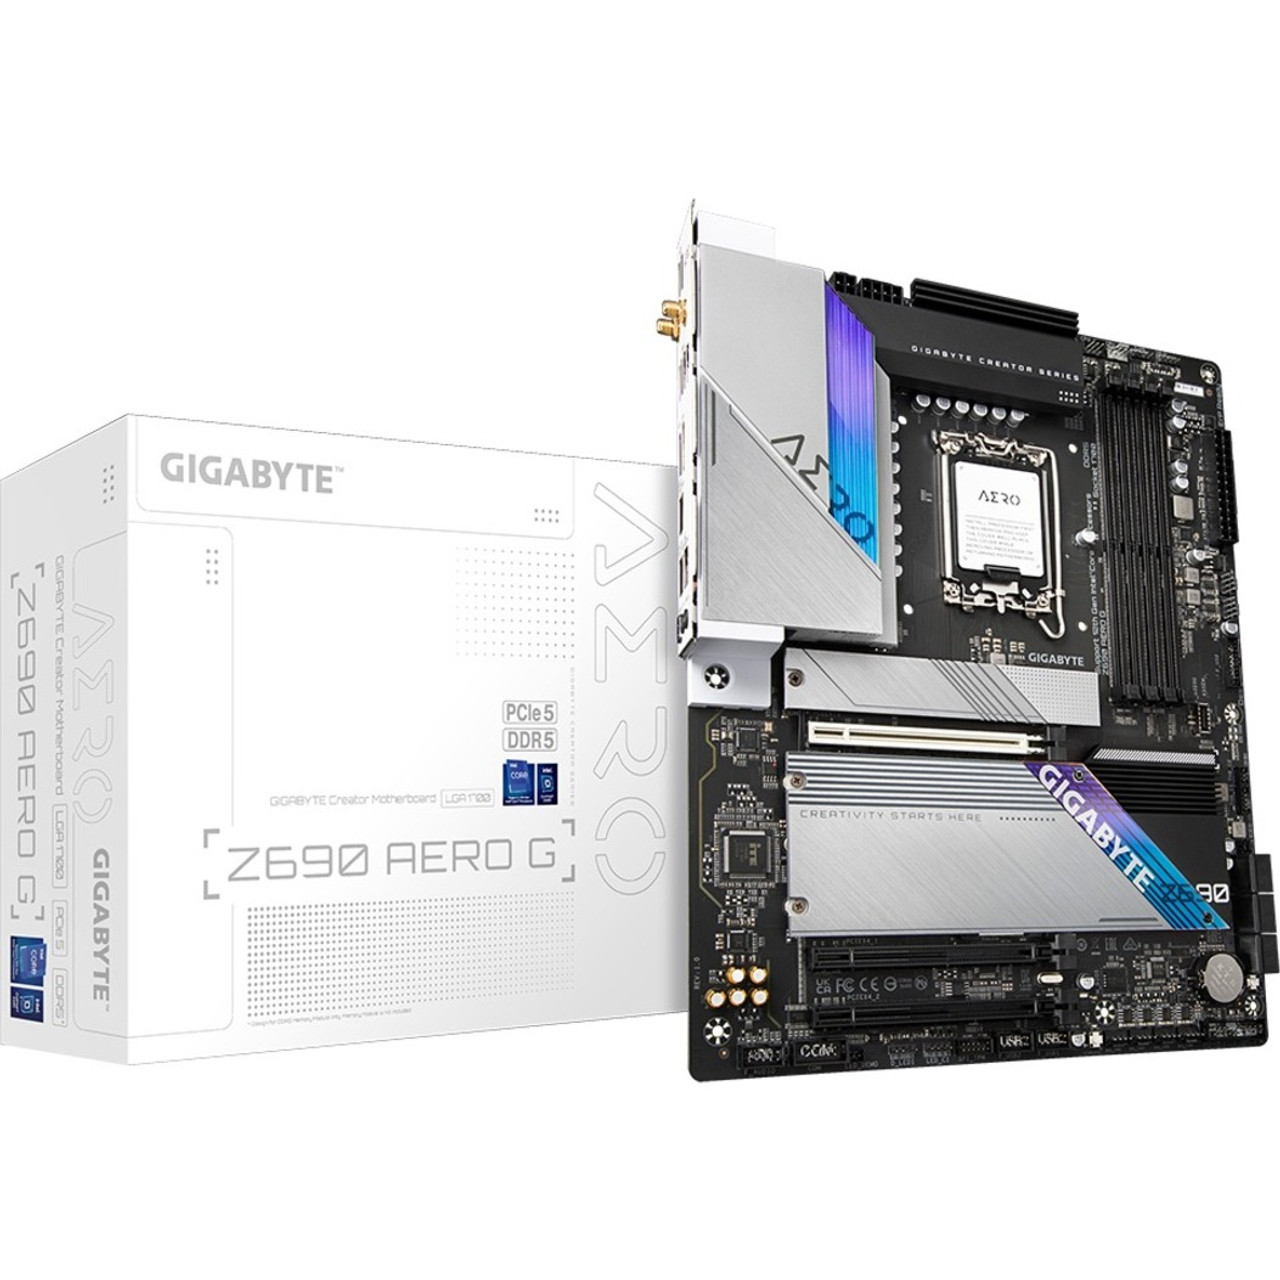 Gigabyte Z690 AERO G Gaming Desktop Motherboard - Intel Z690 Chipset - Socket LGA-1700 - Intel Optane Memory Ready - ATX - Z690 AERO G